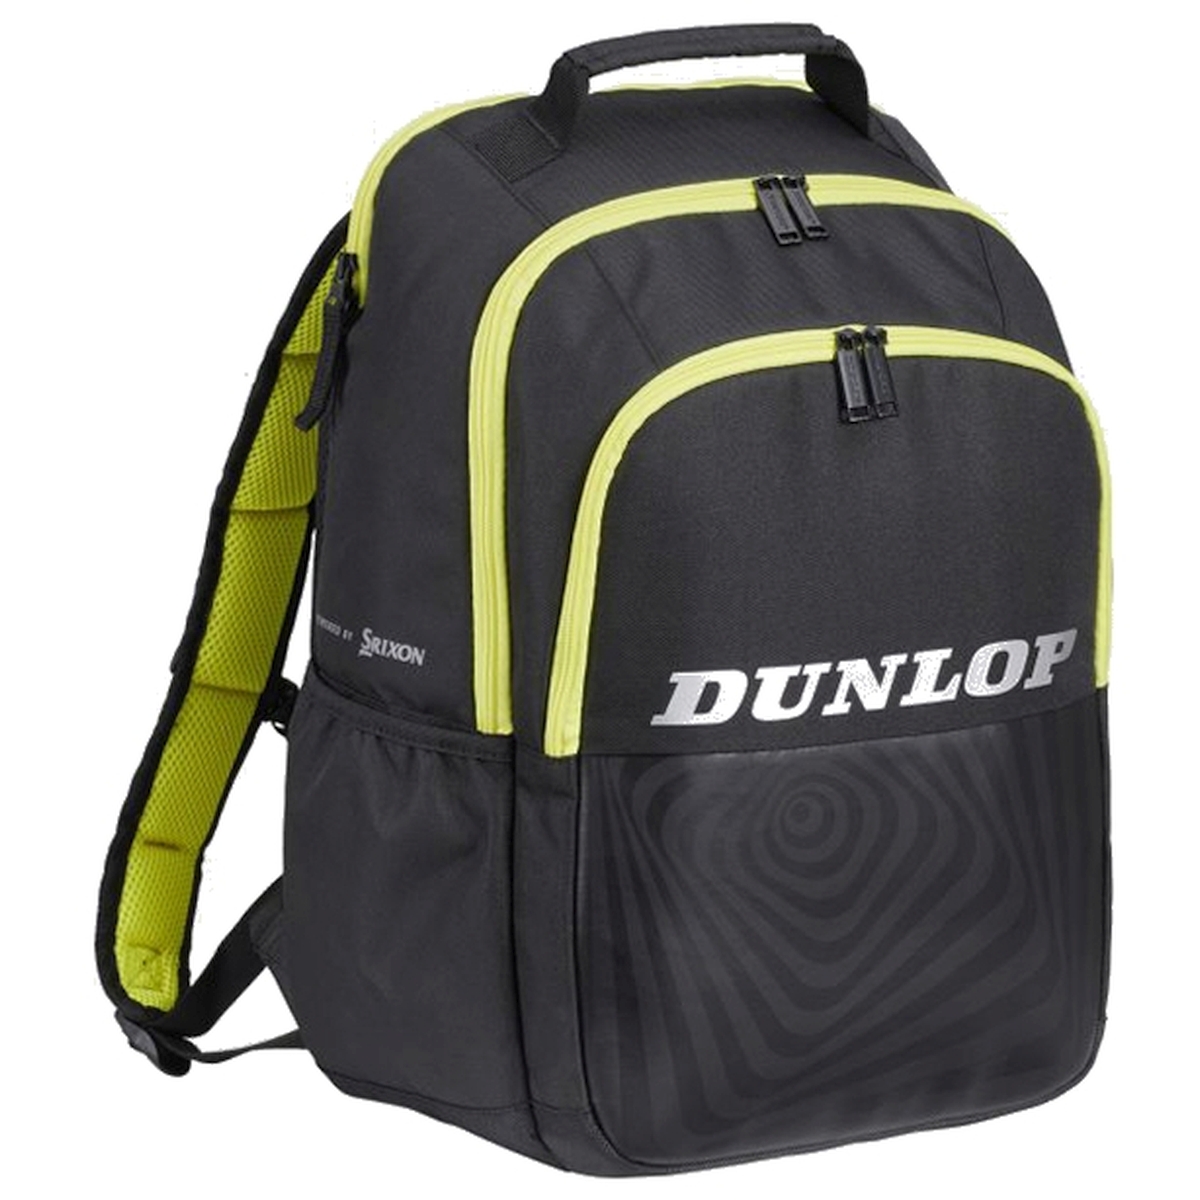 Dunlop SX Performance Tennis Backpack (Black/Yellow)